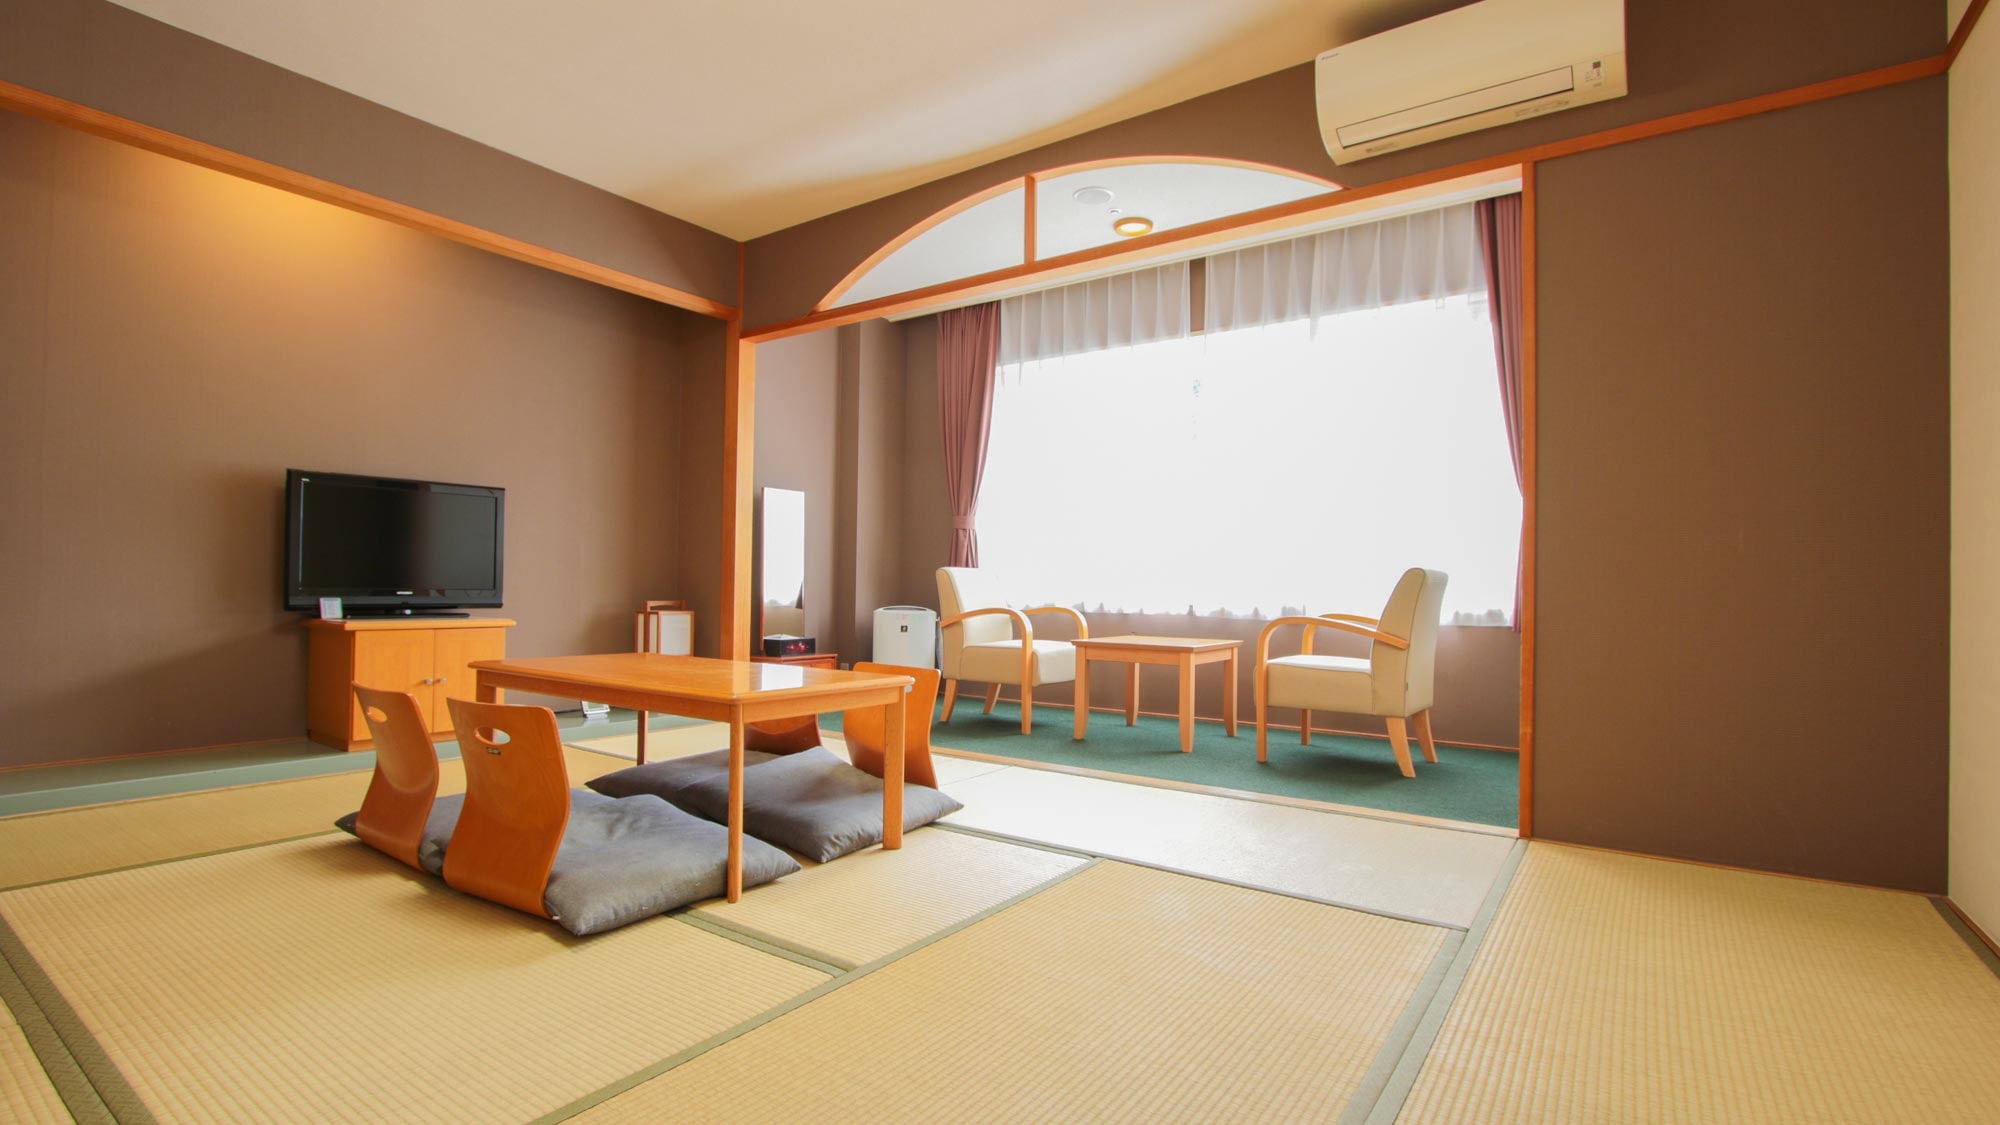 Japanese-style room 10 tatami mats (loose Japanese-style room)